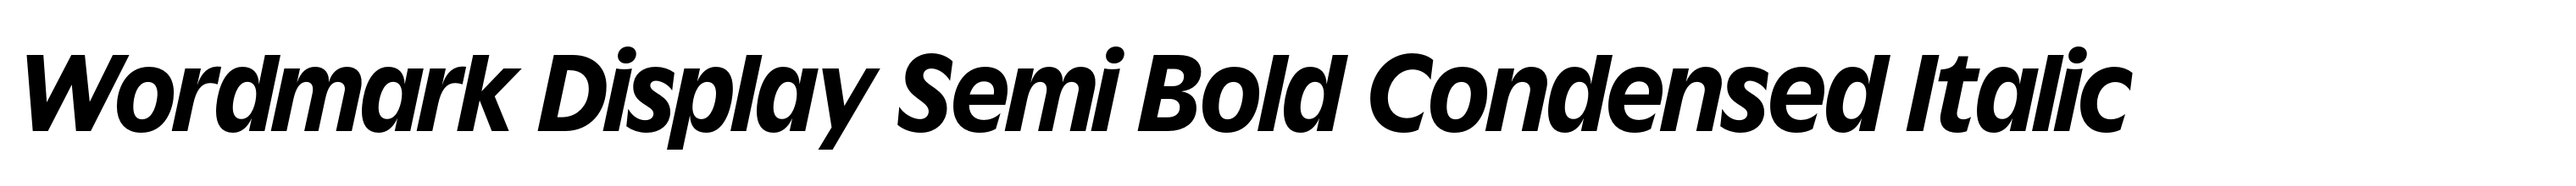 Wordmark Display Semi Bold Condensed Italic